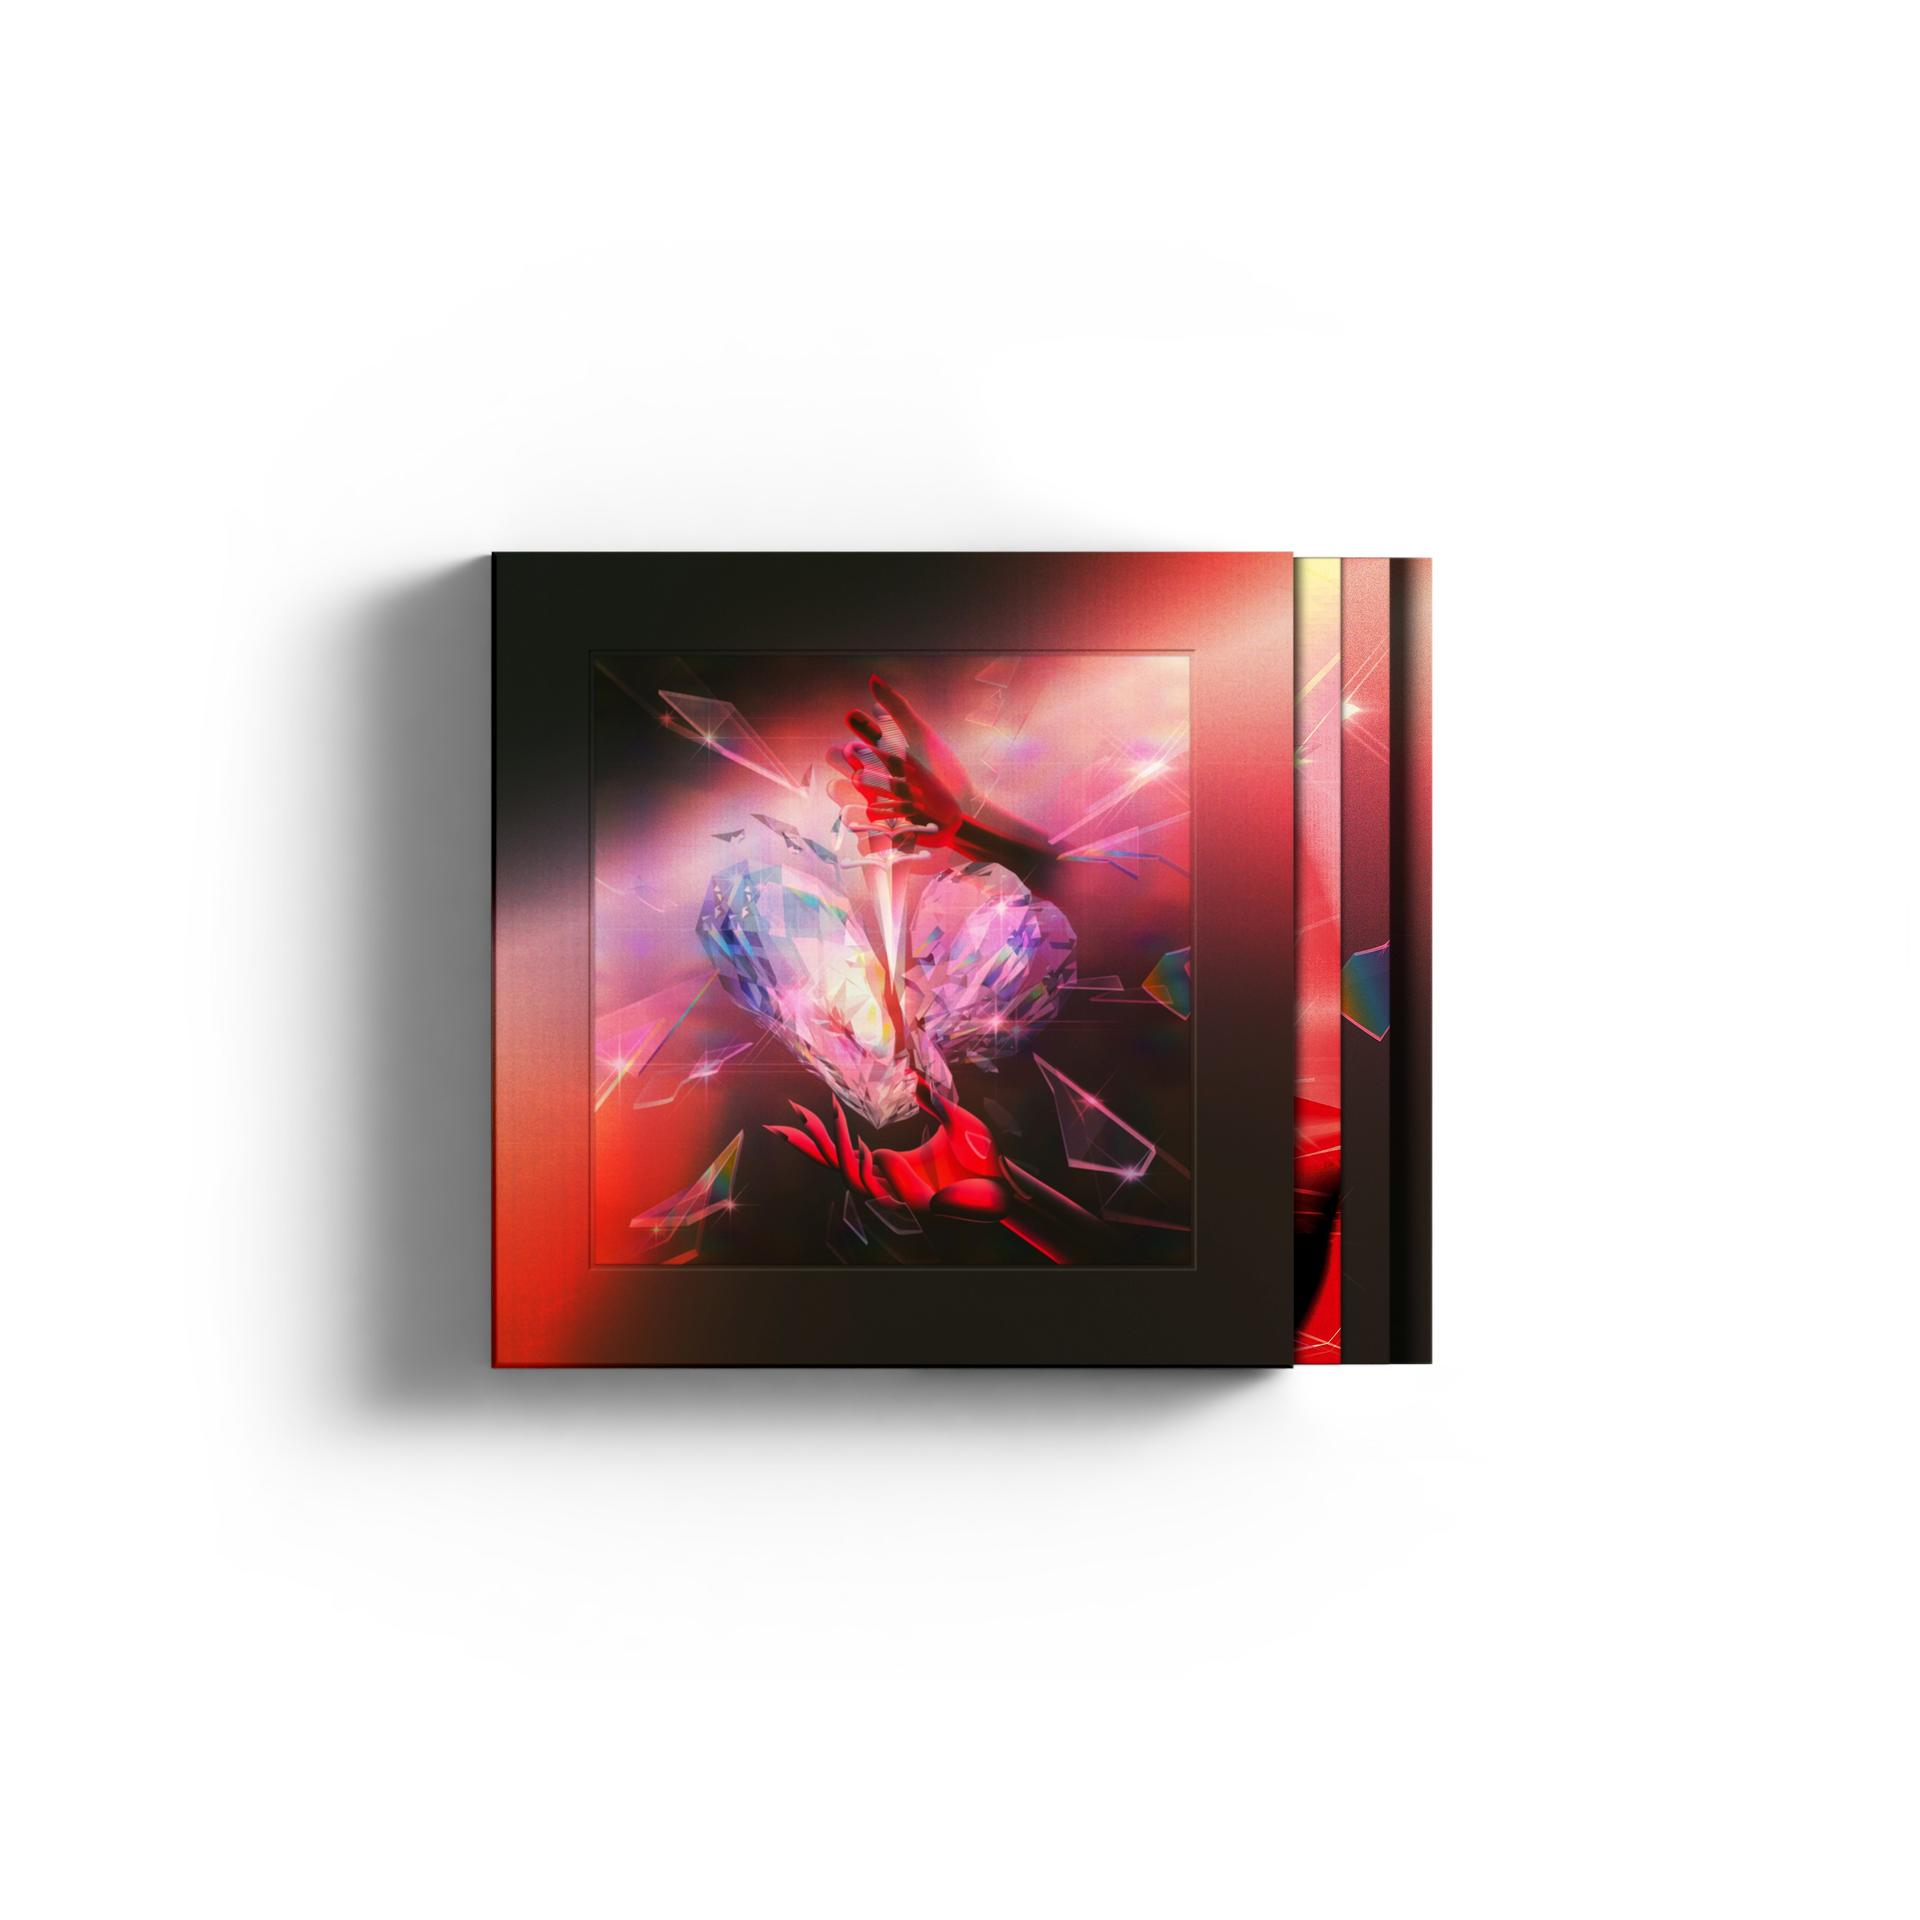 The Rolling Stones Blu-ray Audio) Audio) Hackney CD+BR - (CD Diamonds (LTD. - 